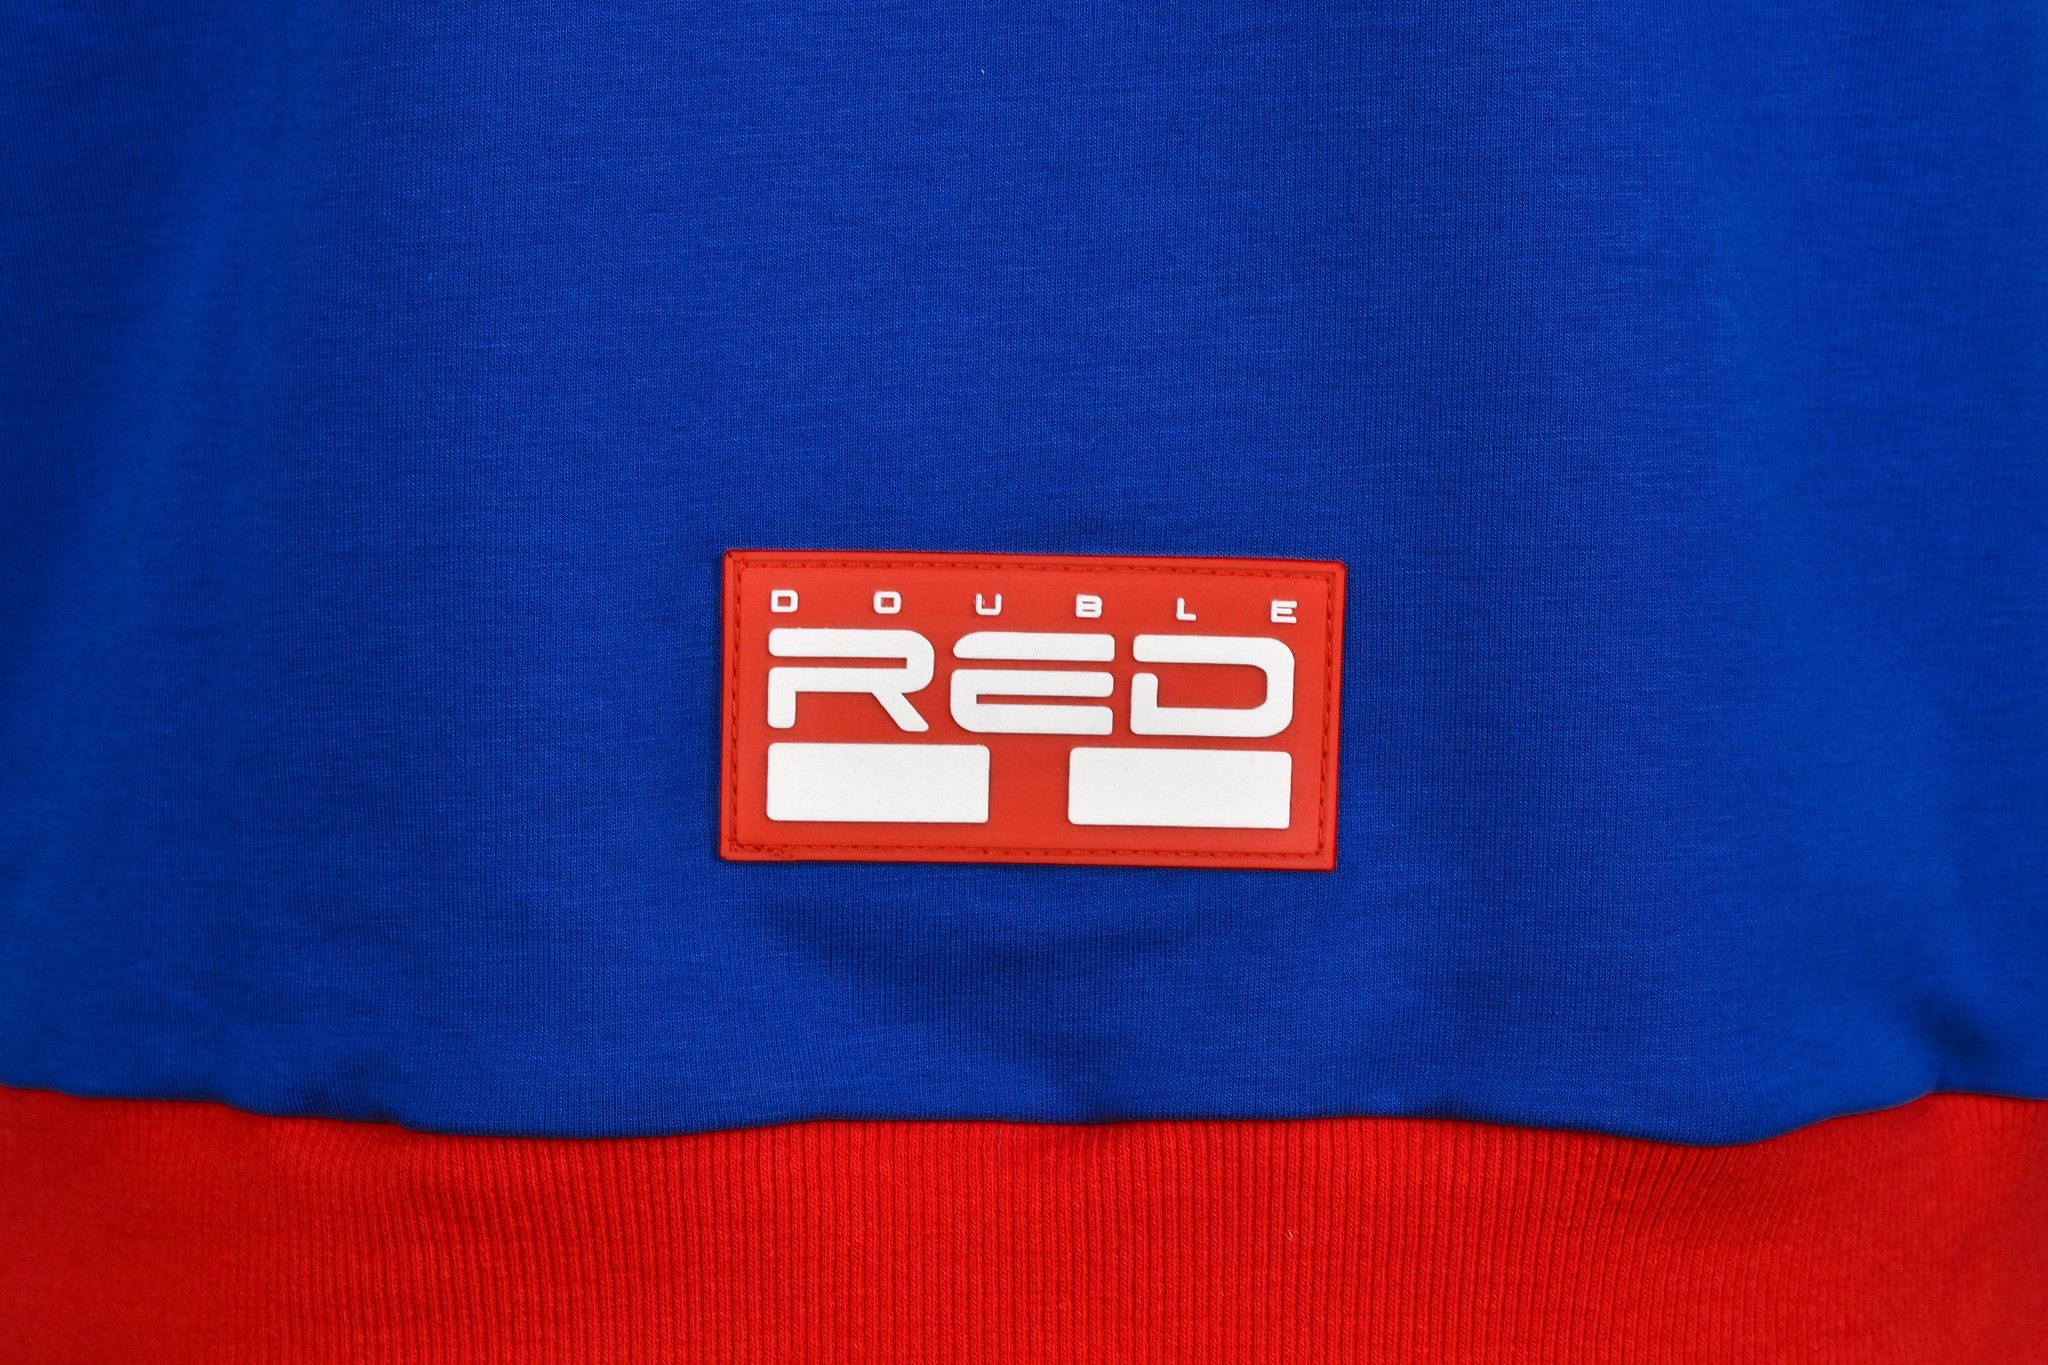 Sweatshirt OUTSTANDING Blue/Red